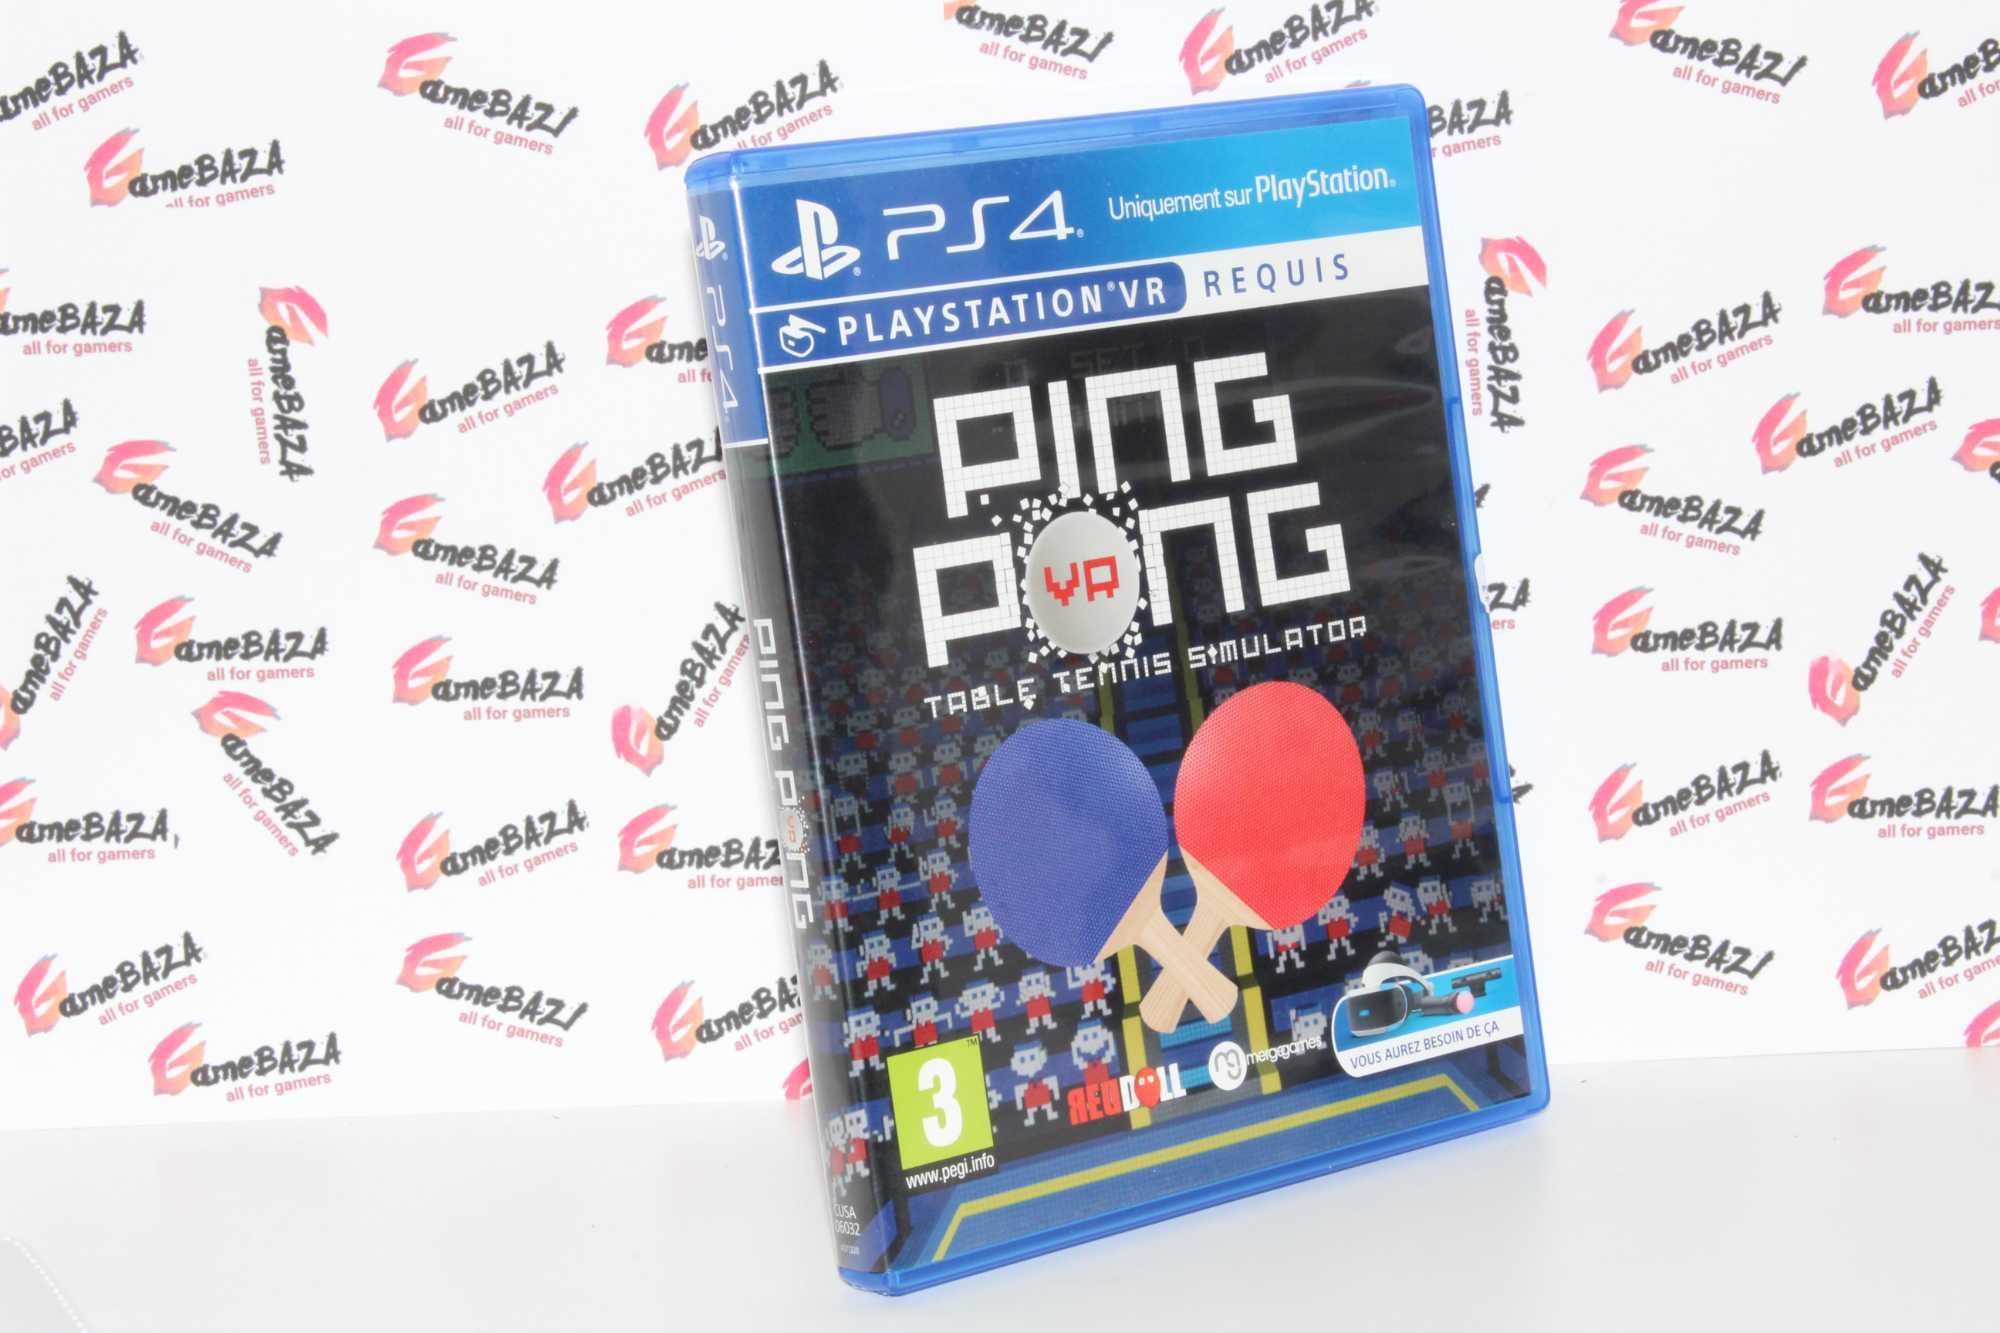 Ping Pong VR: Table Tennis Simulator Ps4 GameBAZA